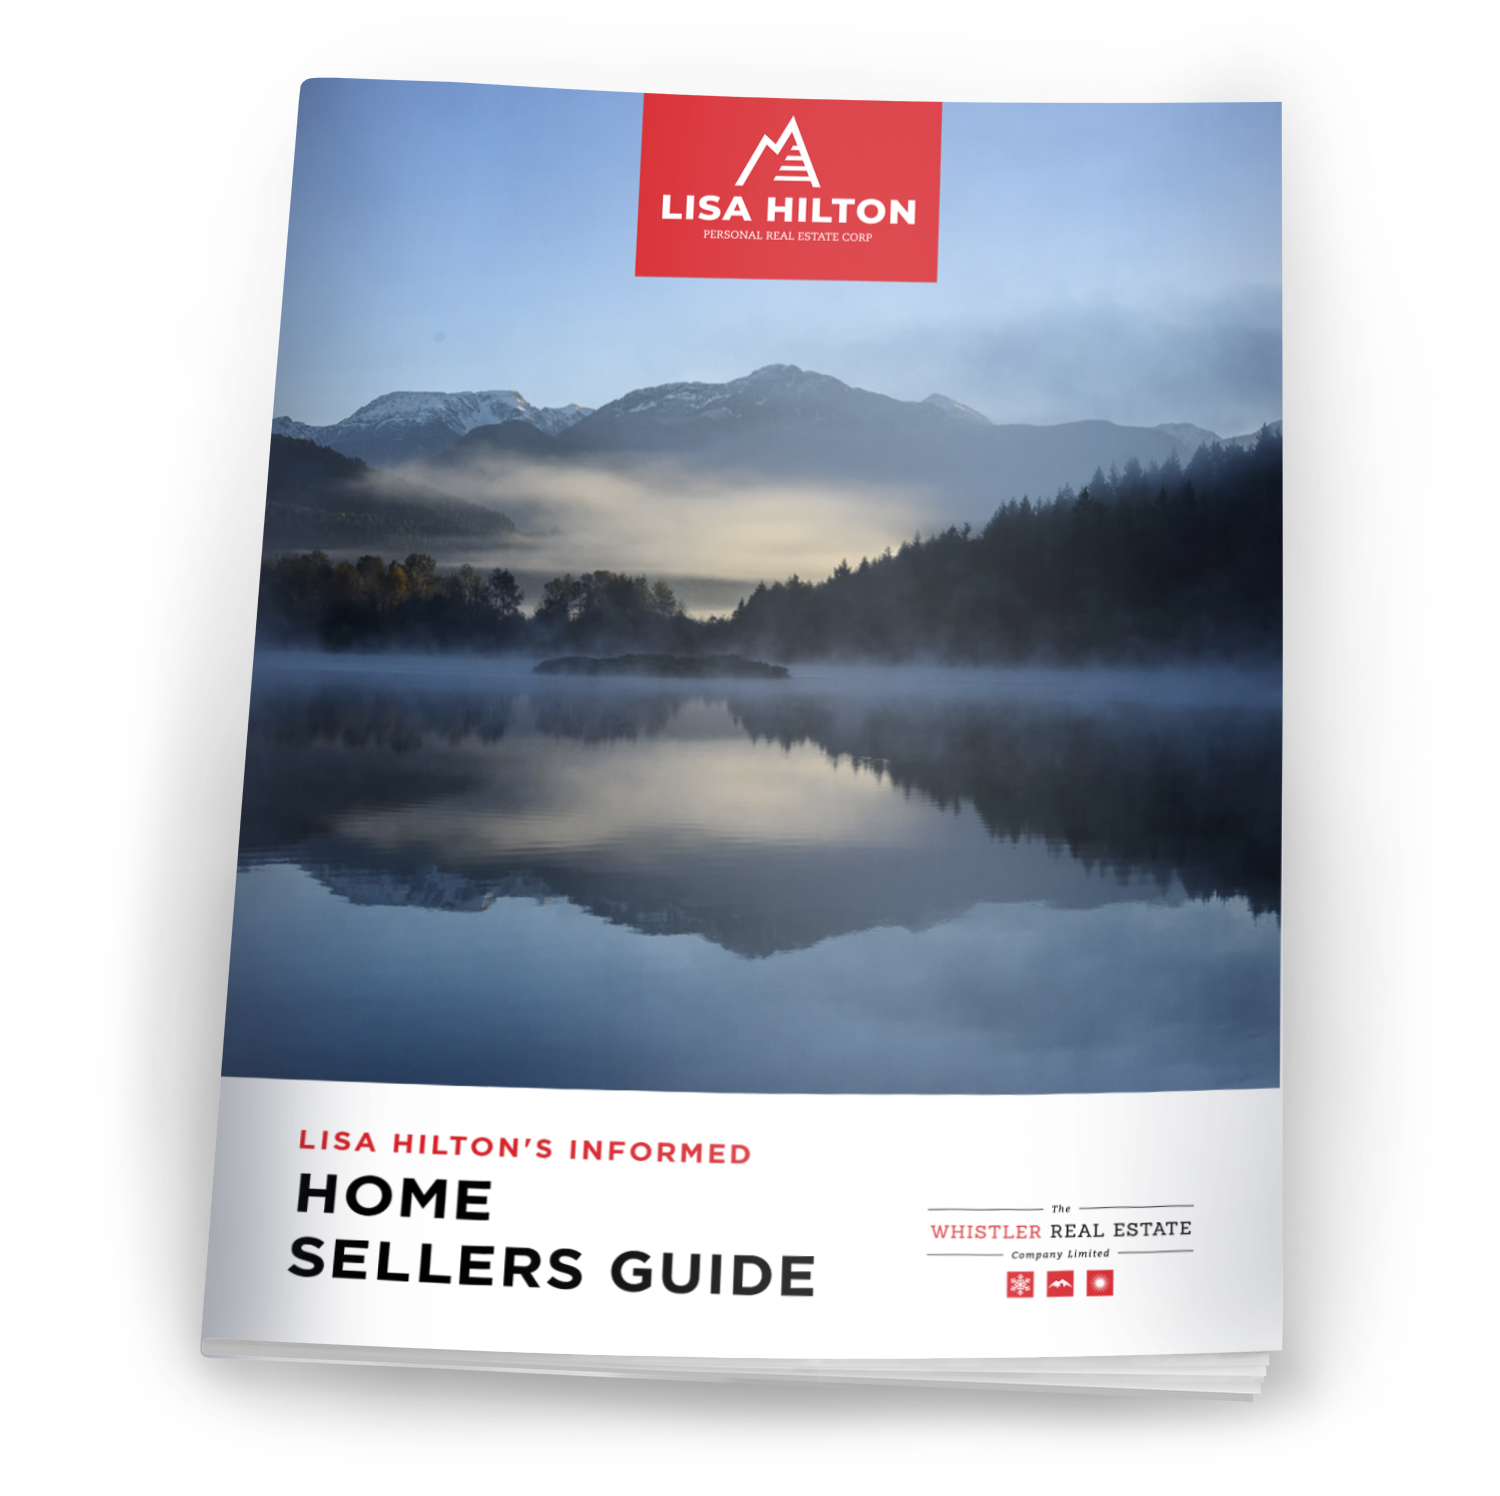 Lisa Hilton's Informed Home Sellers Guide